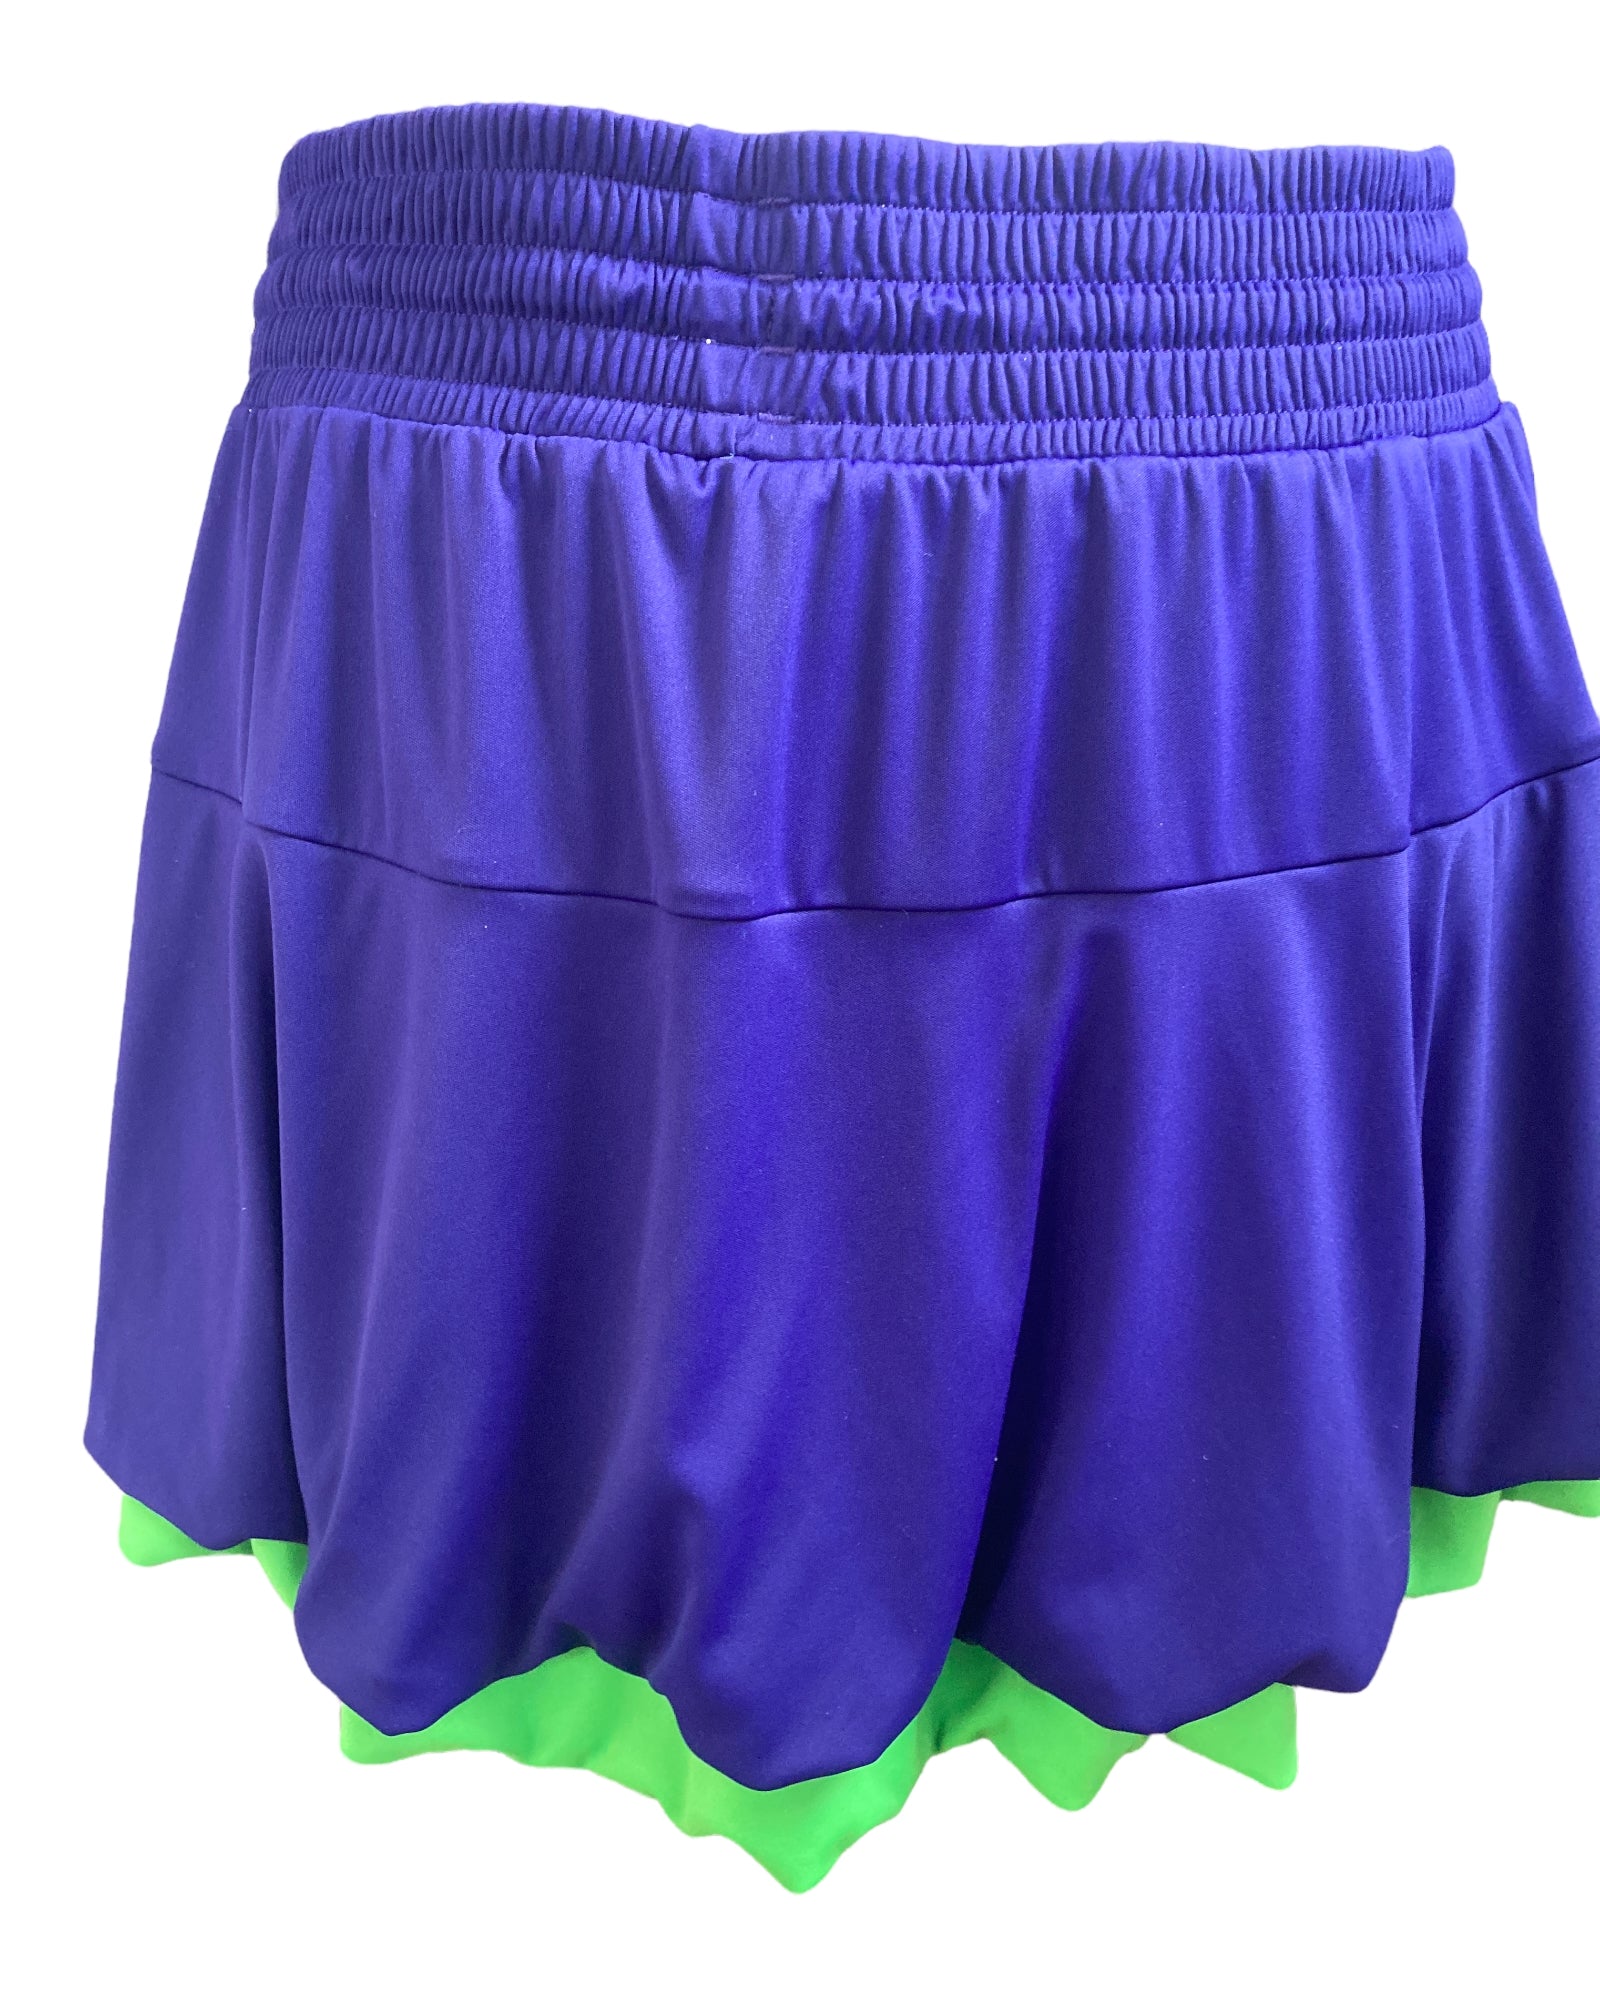 Adidas Adizero Athletic Tennis Skirt, L